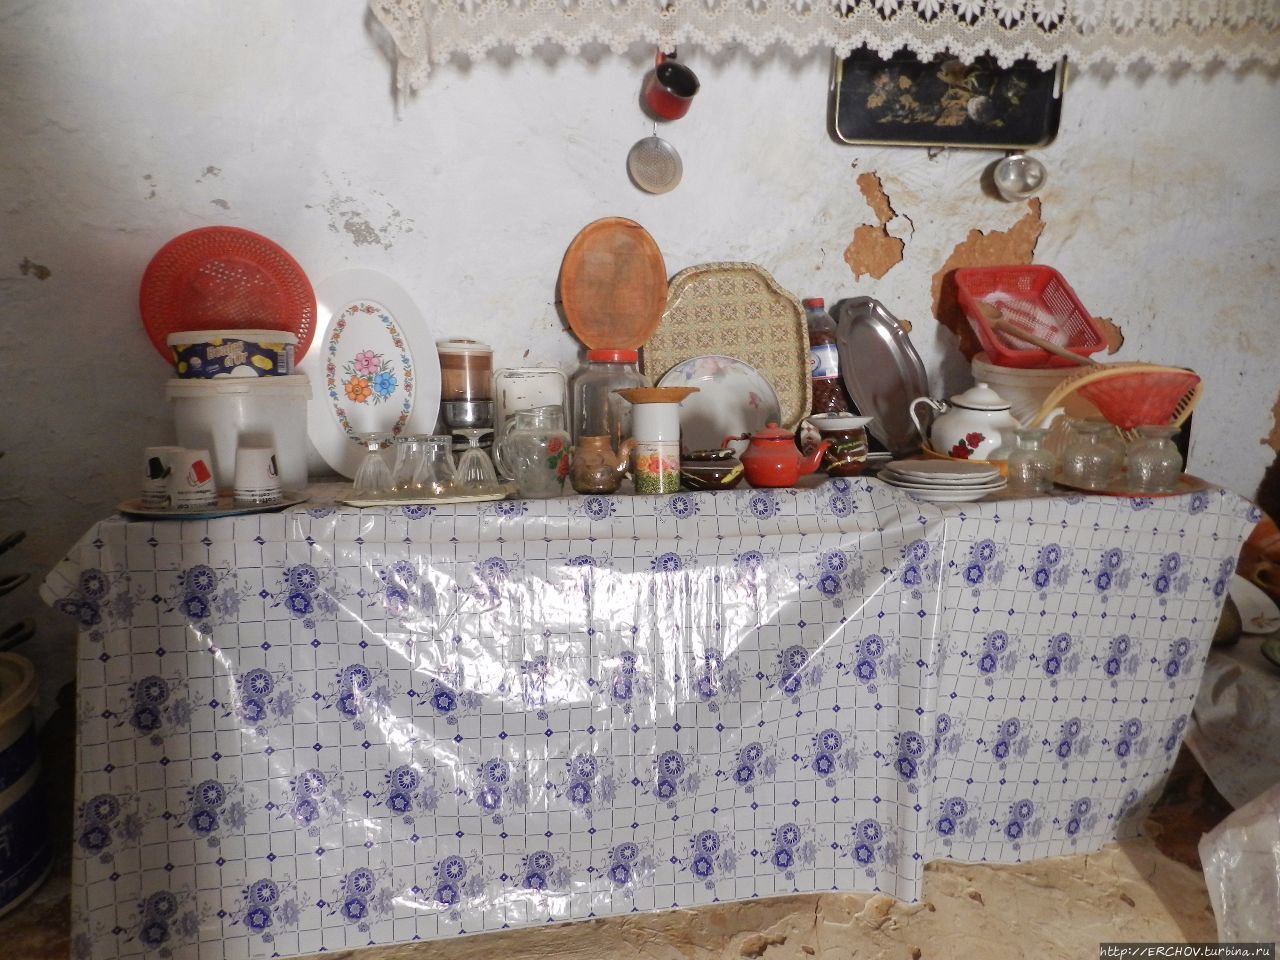 Экскурсия в Сахару. Ч — 2. В гостях у бабушки-троглодитки Матмата, Тунис